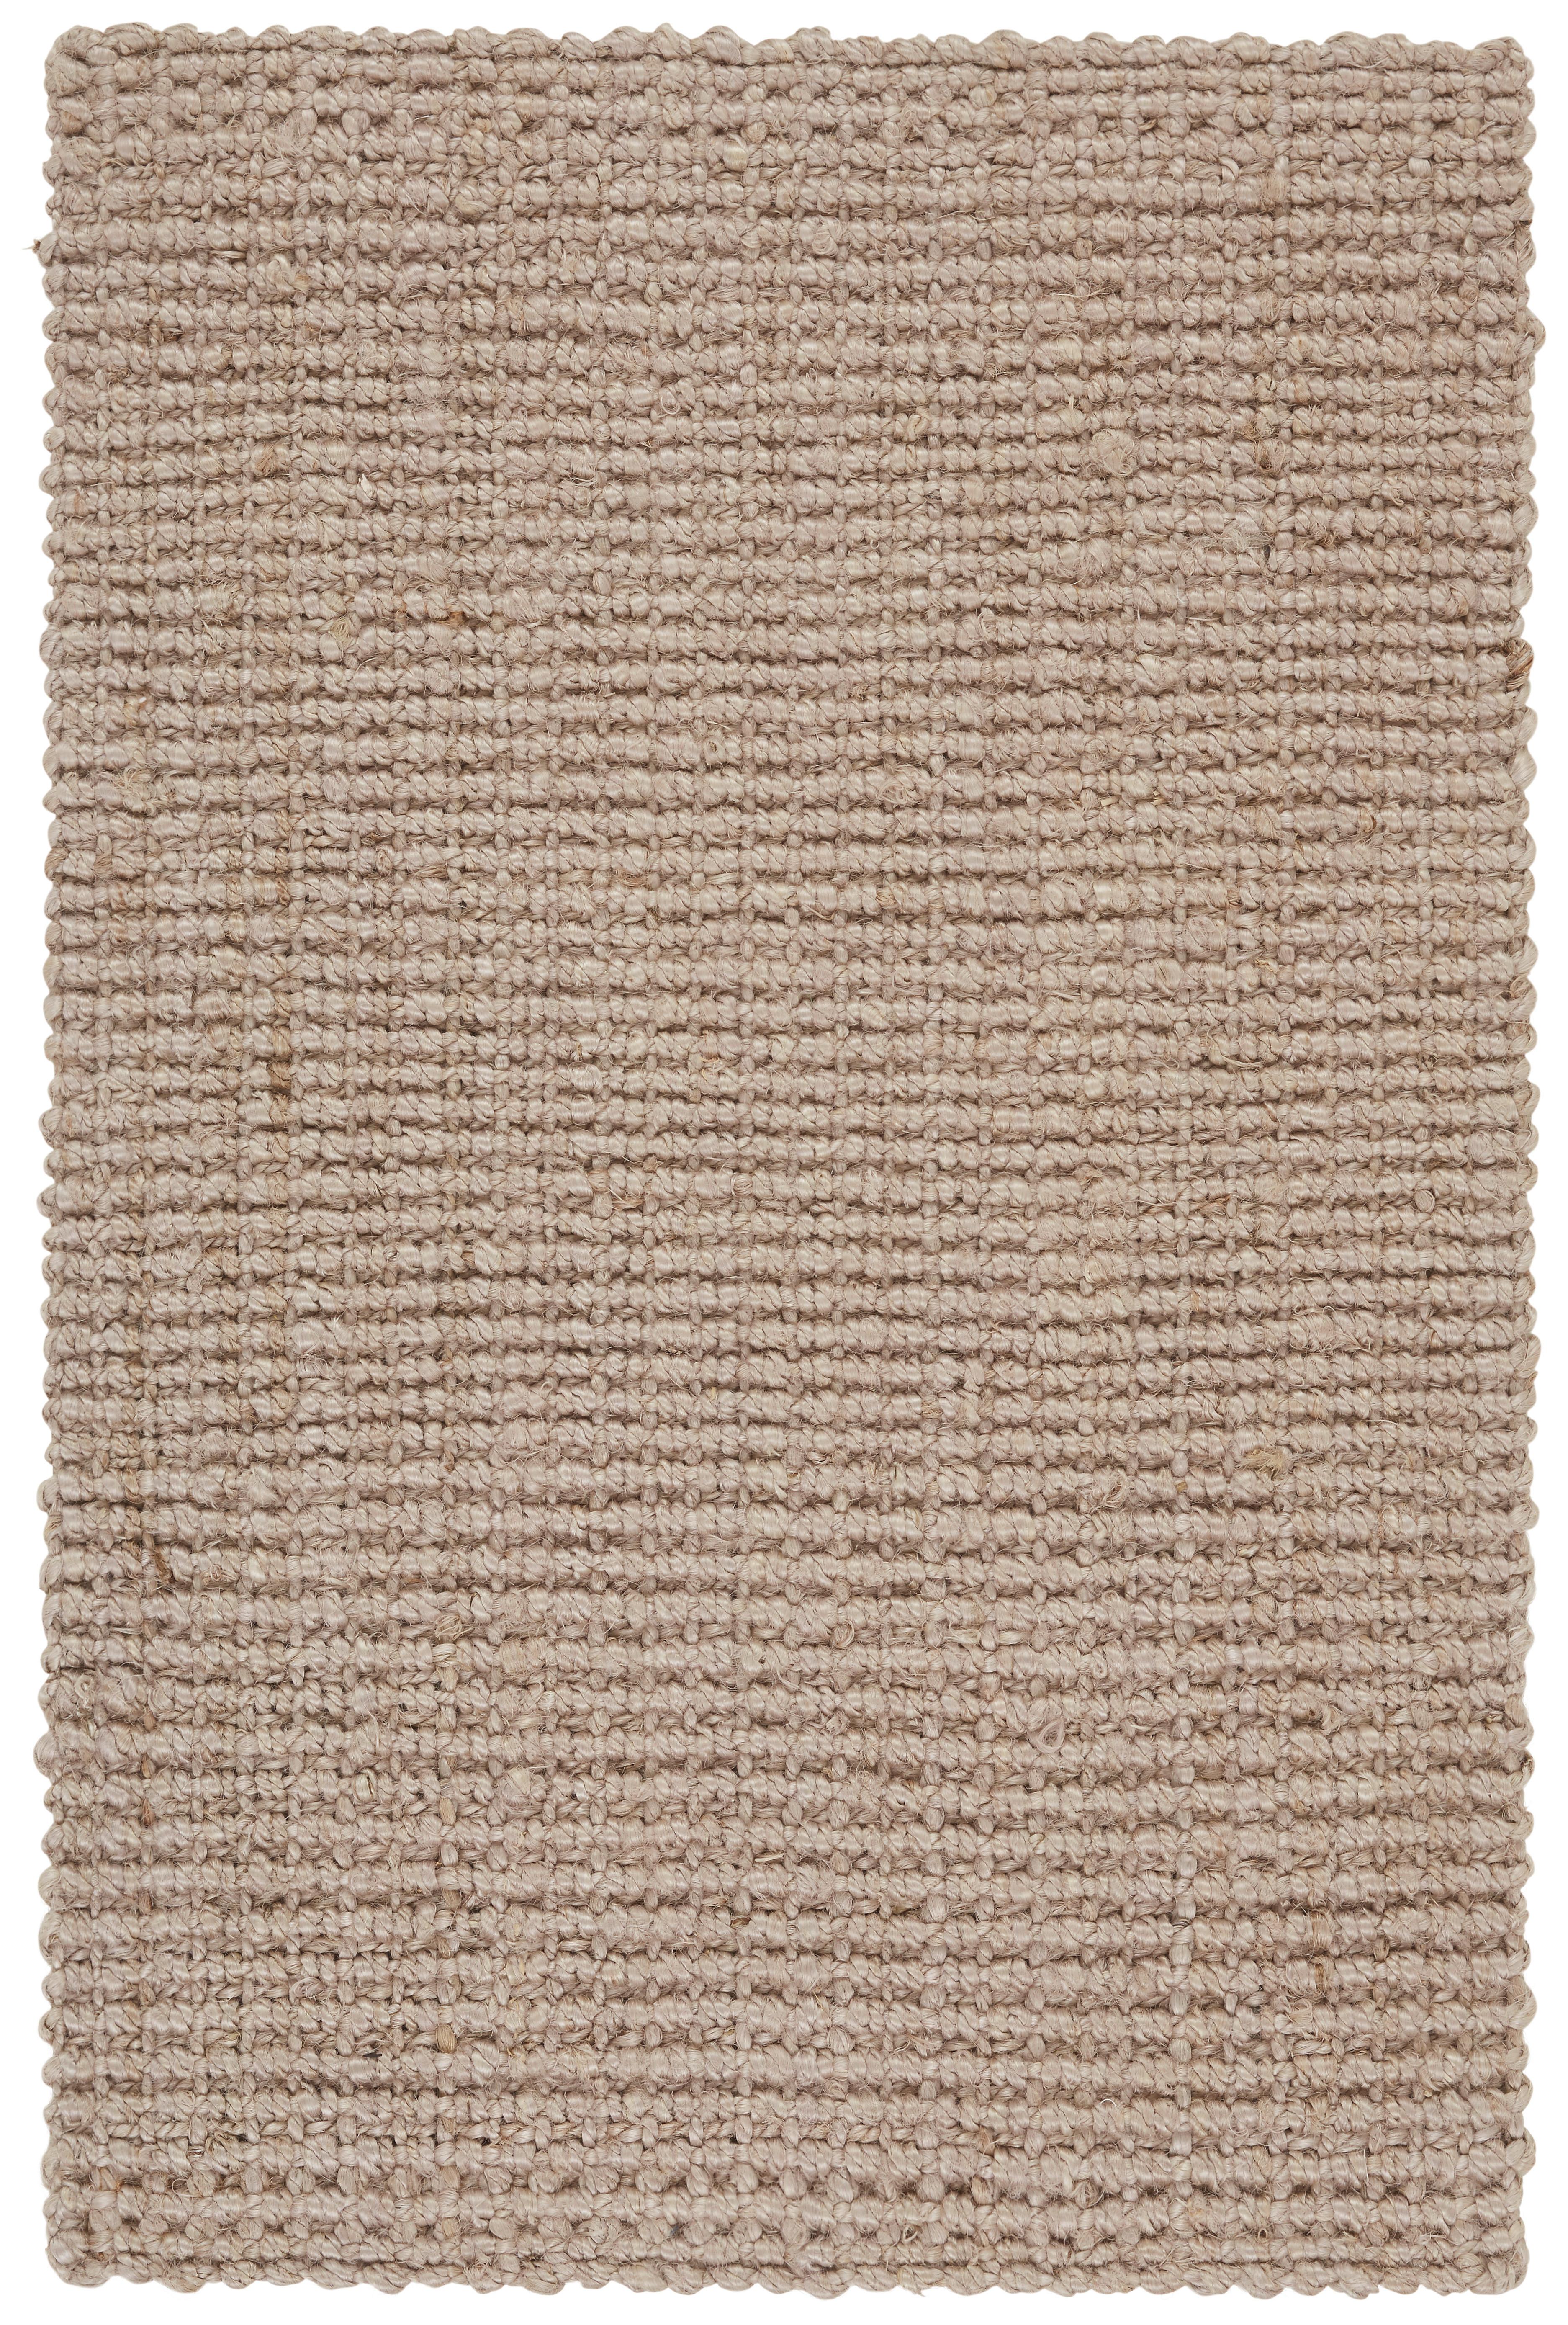 Handwebteppich Stockholm Grau, ca. 60x90cm - Grau, Basics, Textil (60/90cm) - Modern Living